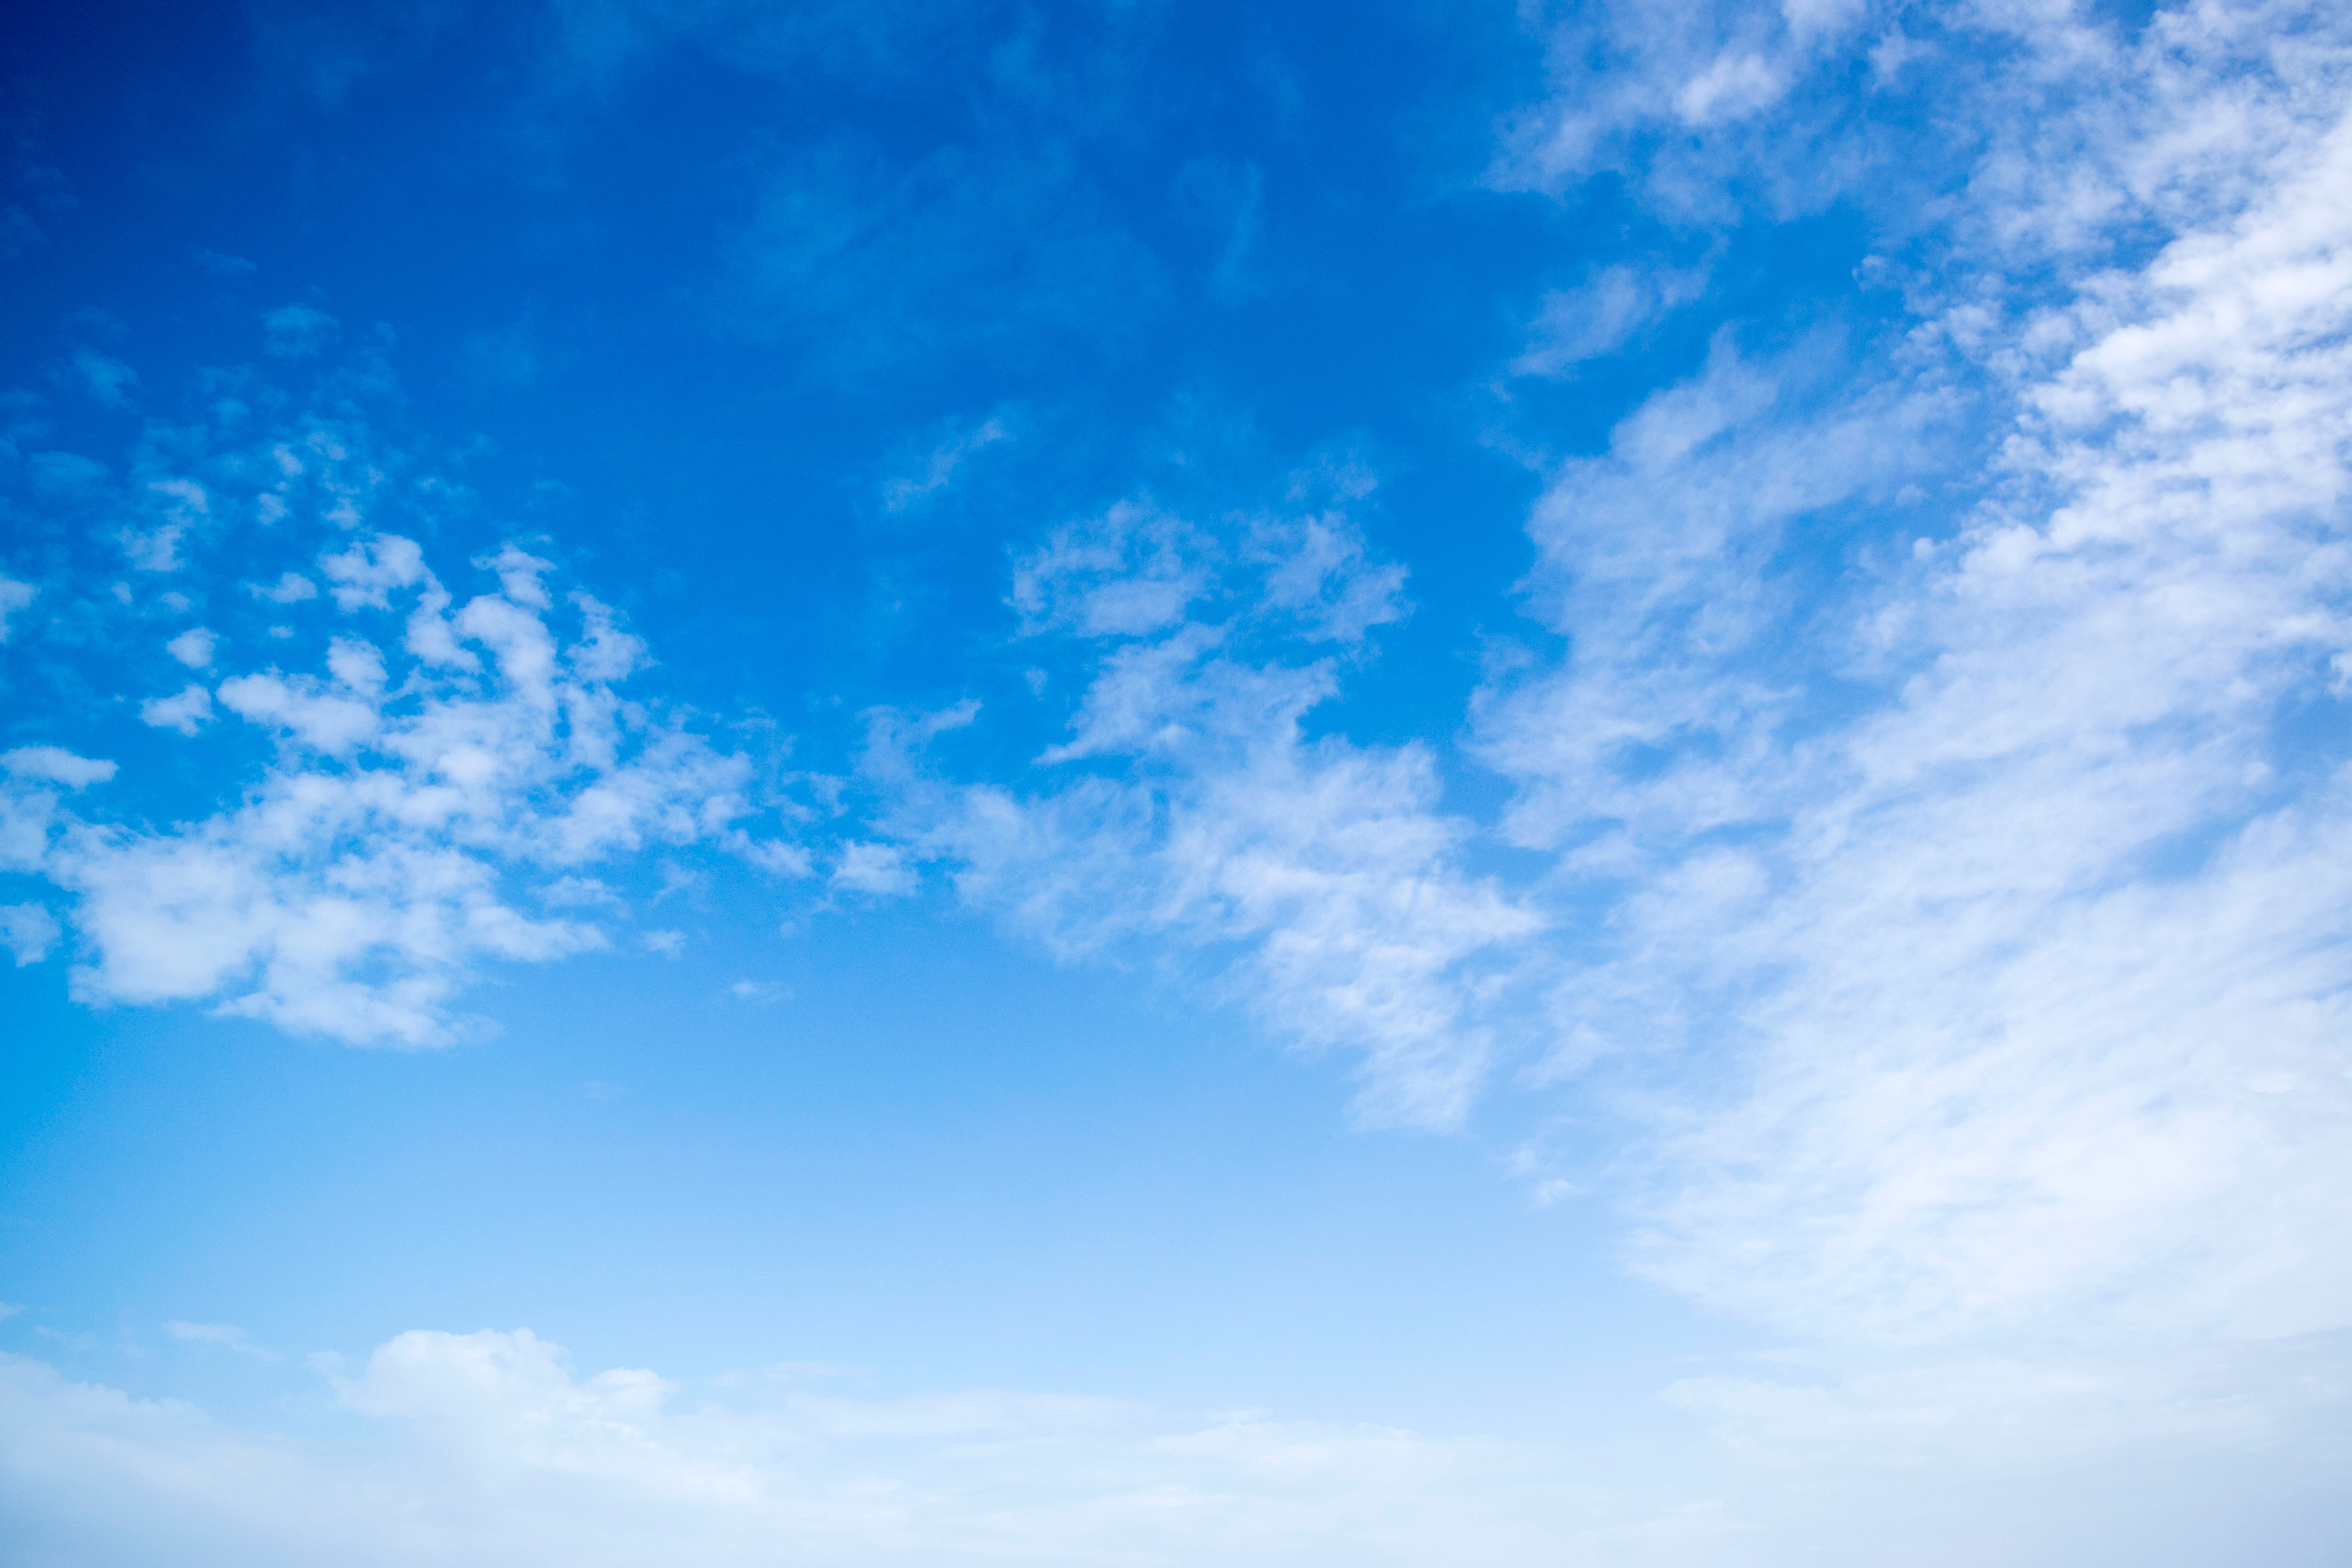 atmosphere-blue-sky-clouds-912110 - John Parsons